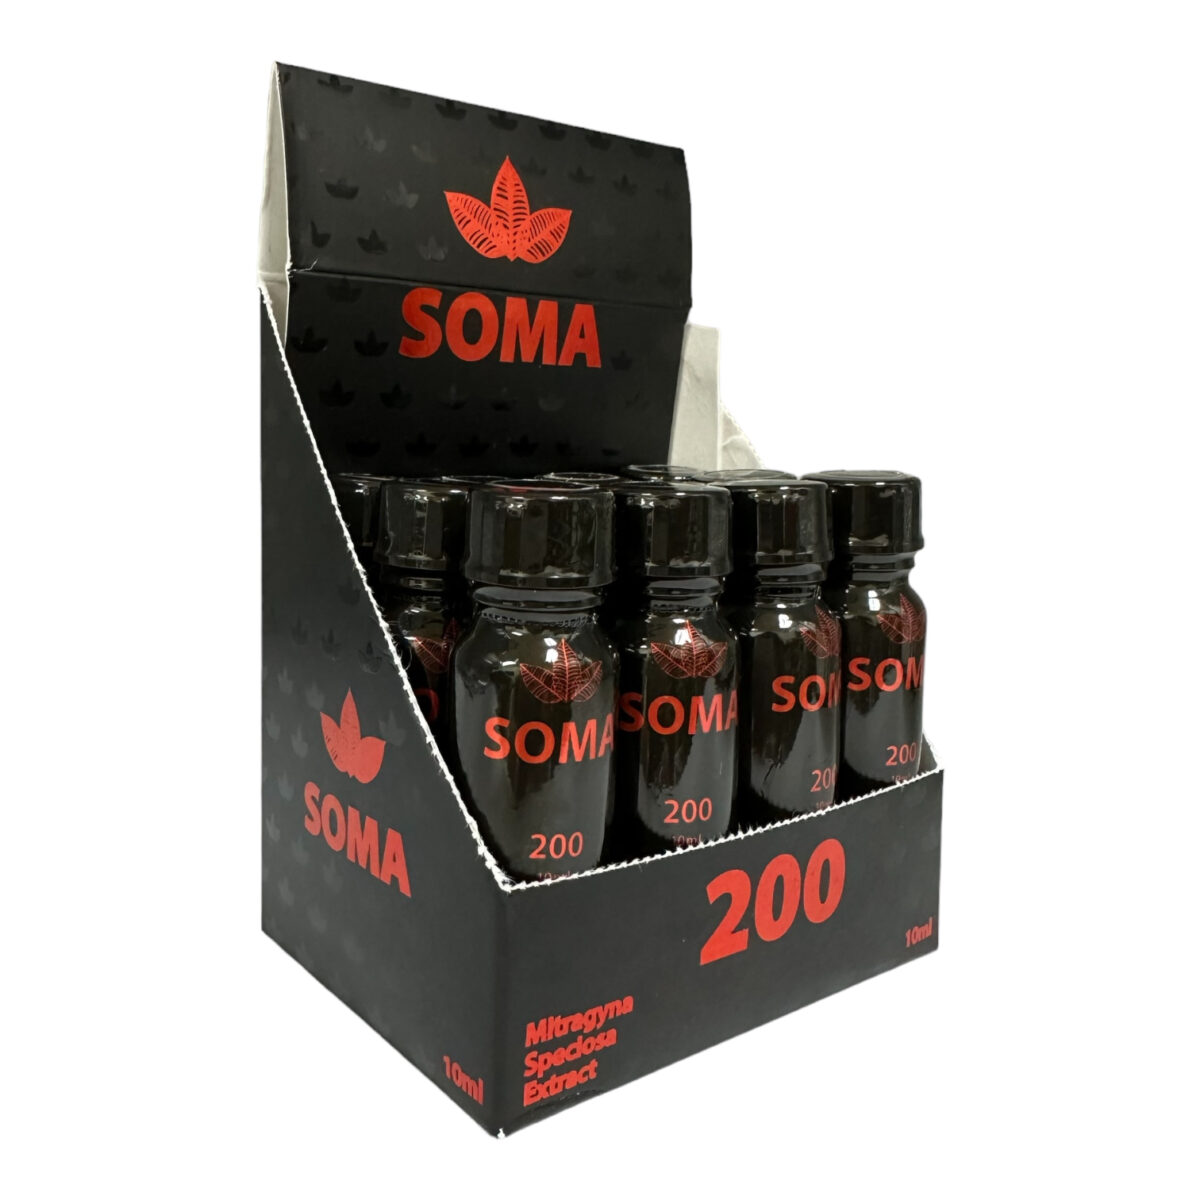 Soma Kratom Extract 200mg Shot – 10ml